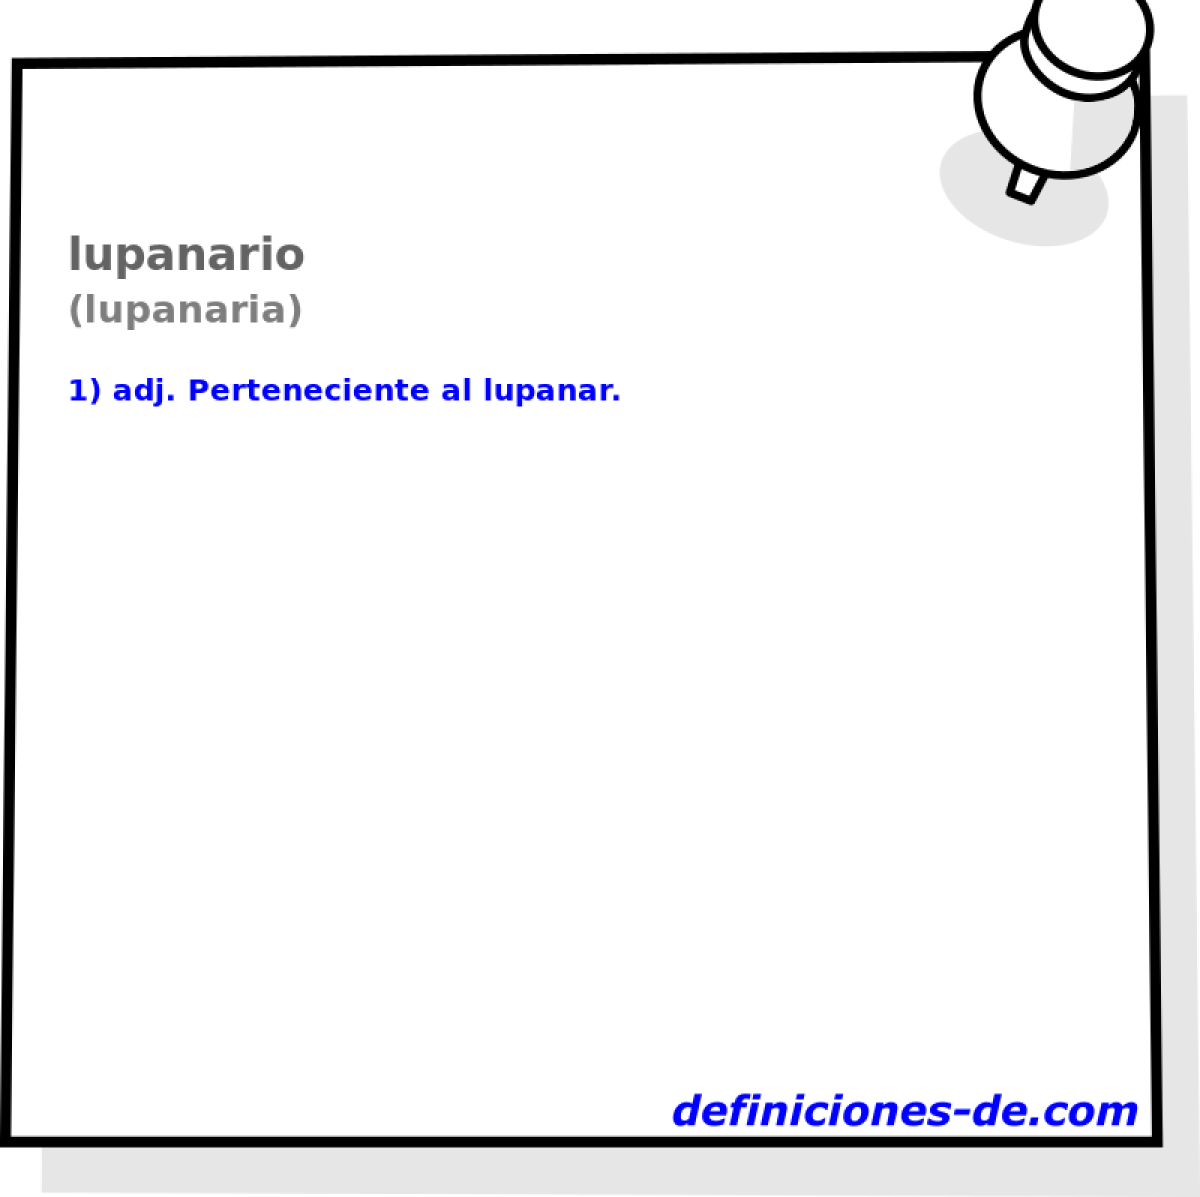 lupanario (lupanaria)